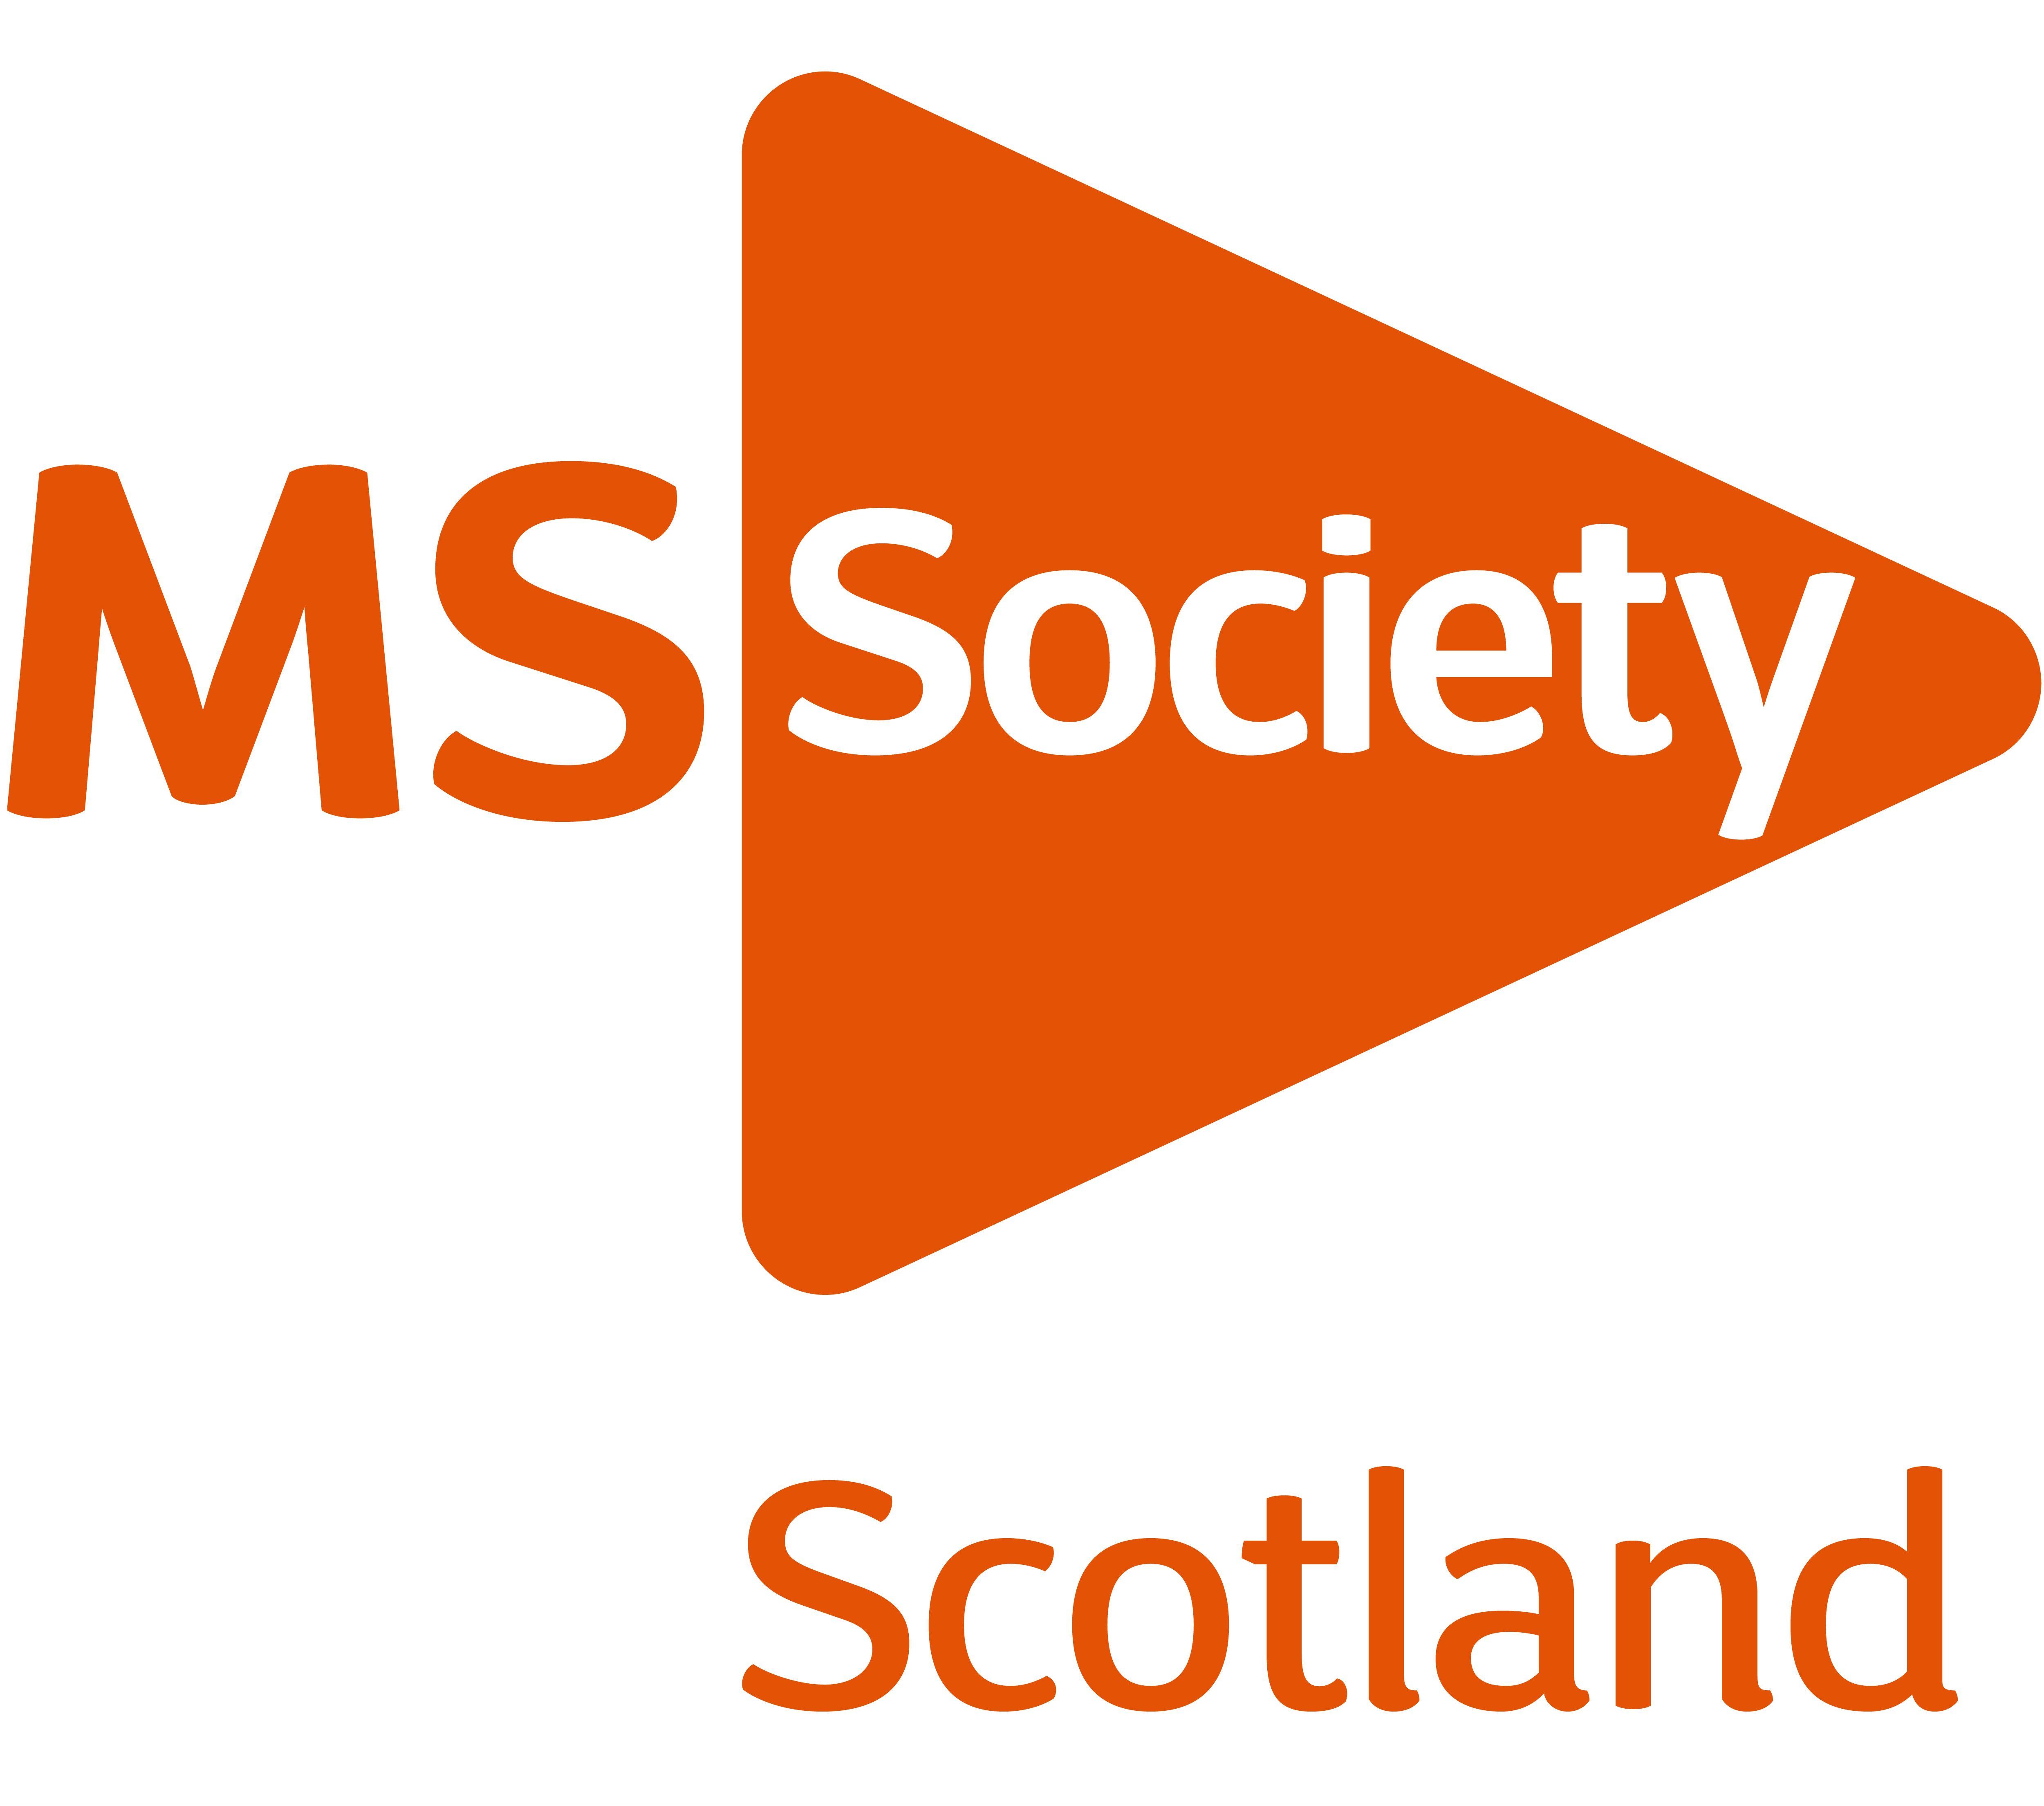 Society Logo - MS Society logo | Volunteer news and resources